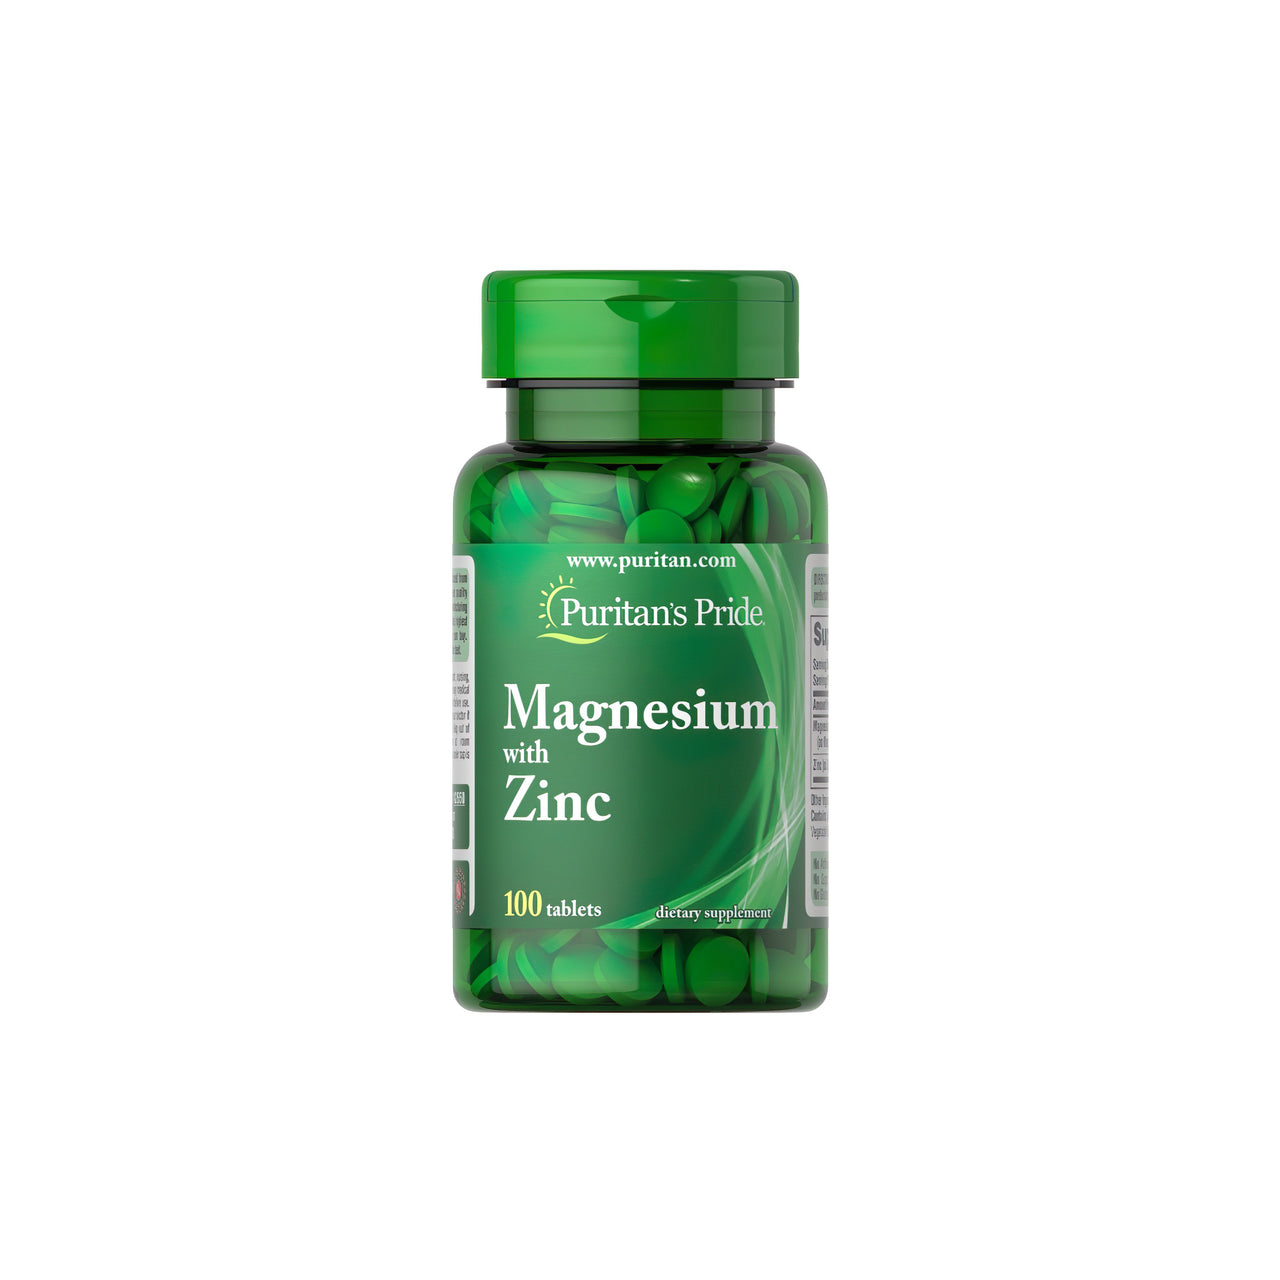 Um frasco de Puritan's Pride Magnesium with zinc 100 tablets.